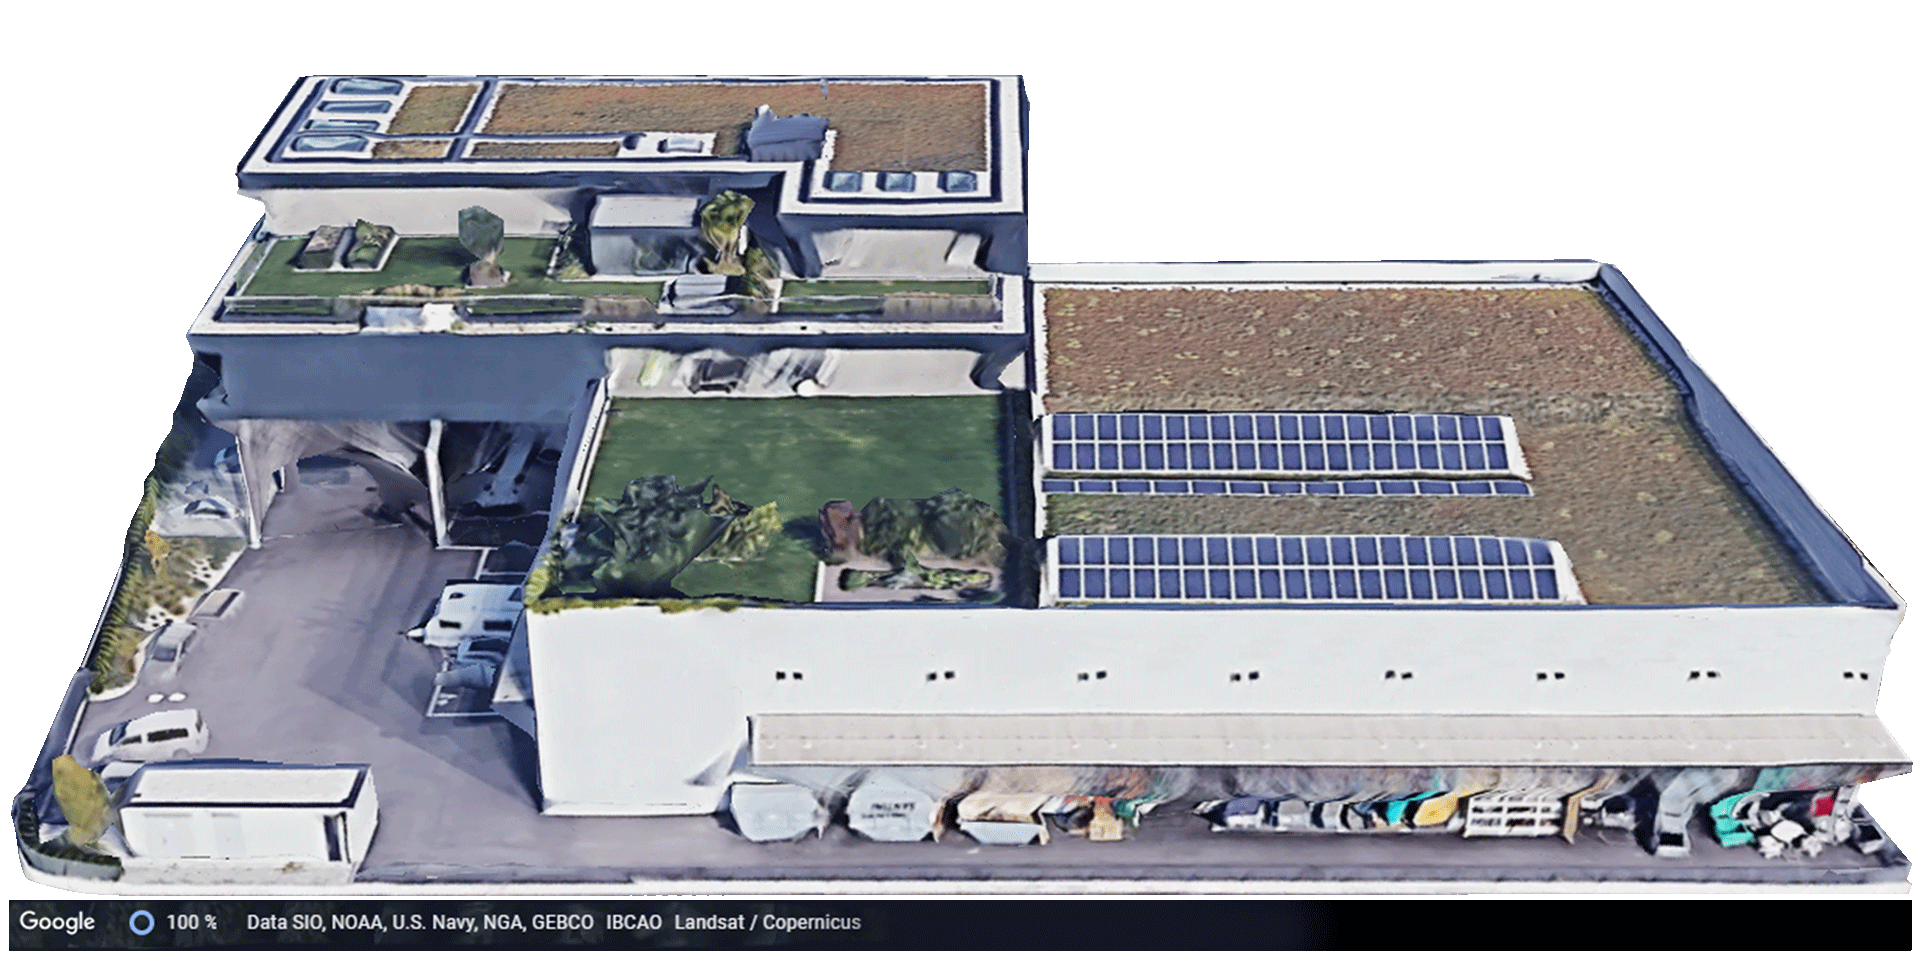 Espansione del nostro impianto fotovoltaico Photovoltaik 1 2